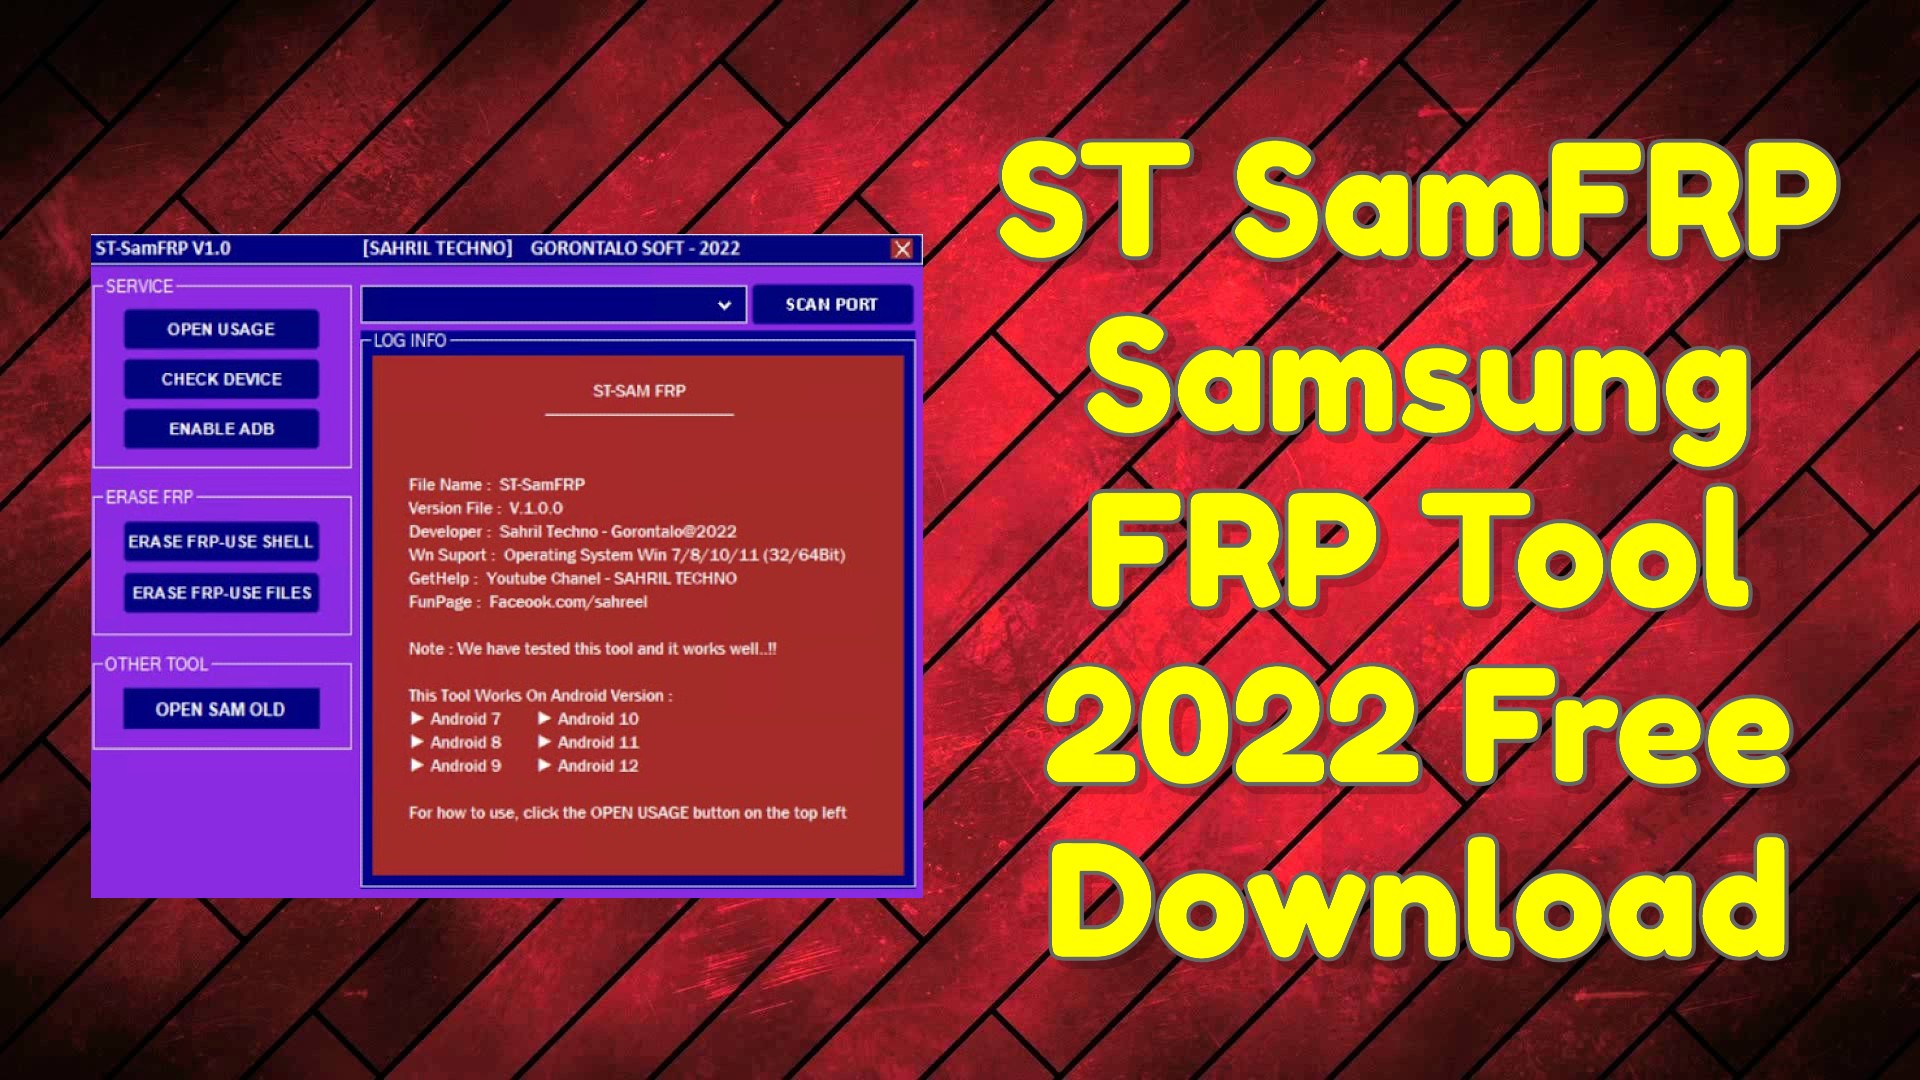 Sam frp tool. Samfw FRP Tool. Samfw Tool 4.7.1. Samsung FRP как открыть youtube. Ali-nx1 FRP.